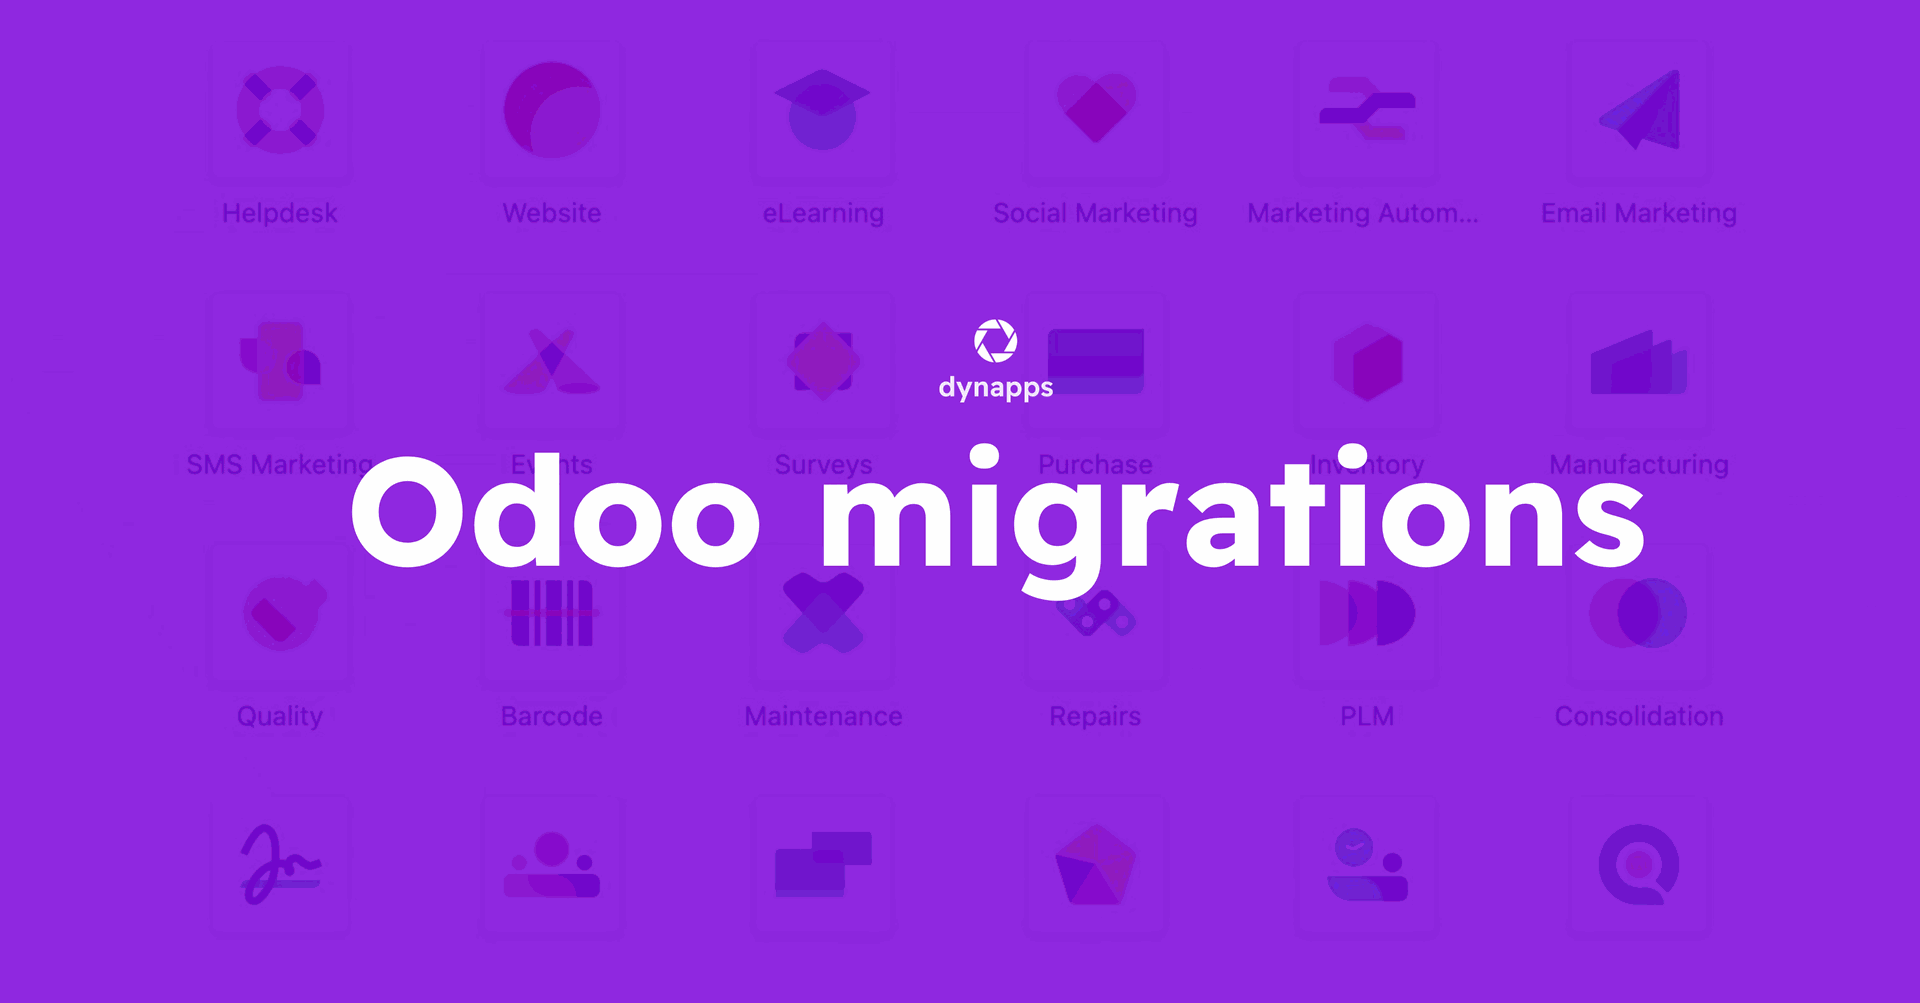 Odoo migrations: how to minimise customisation